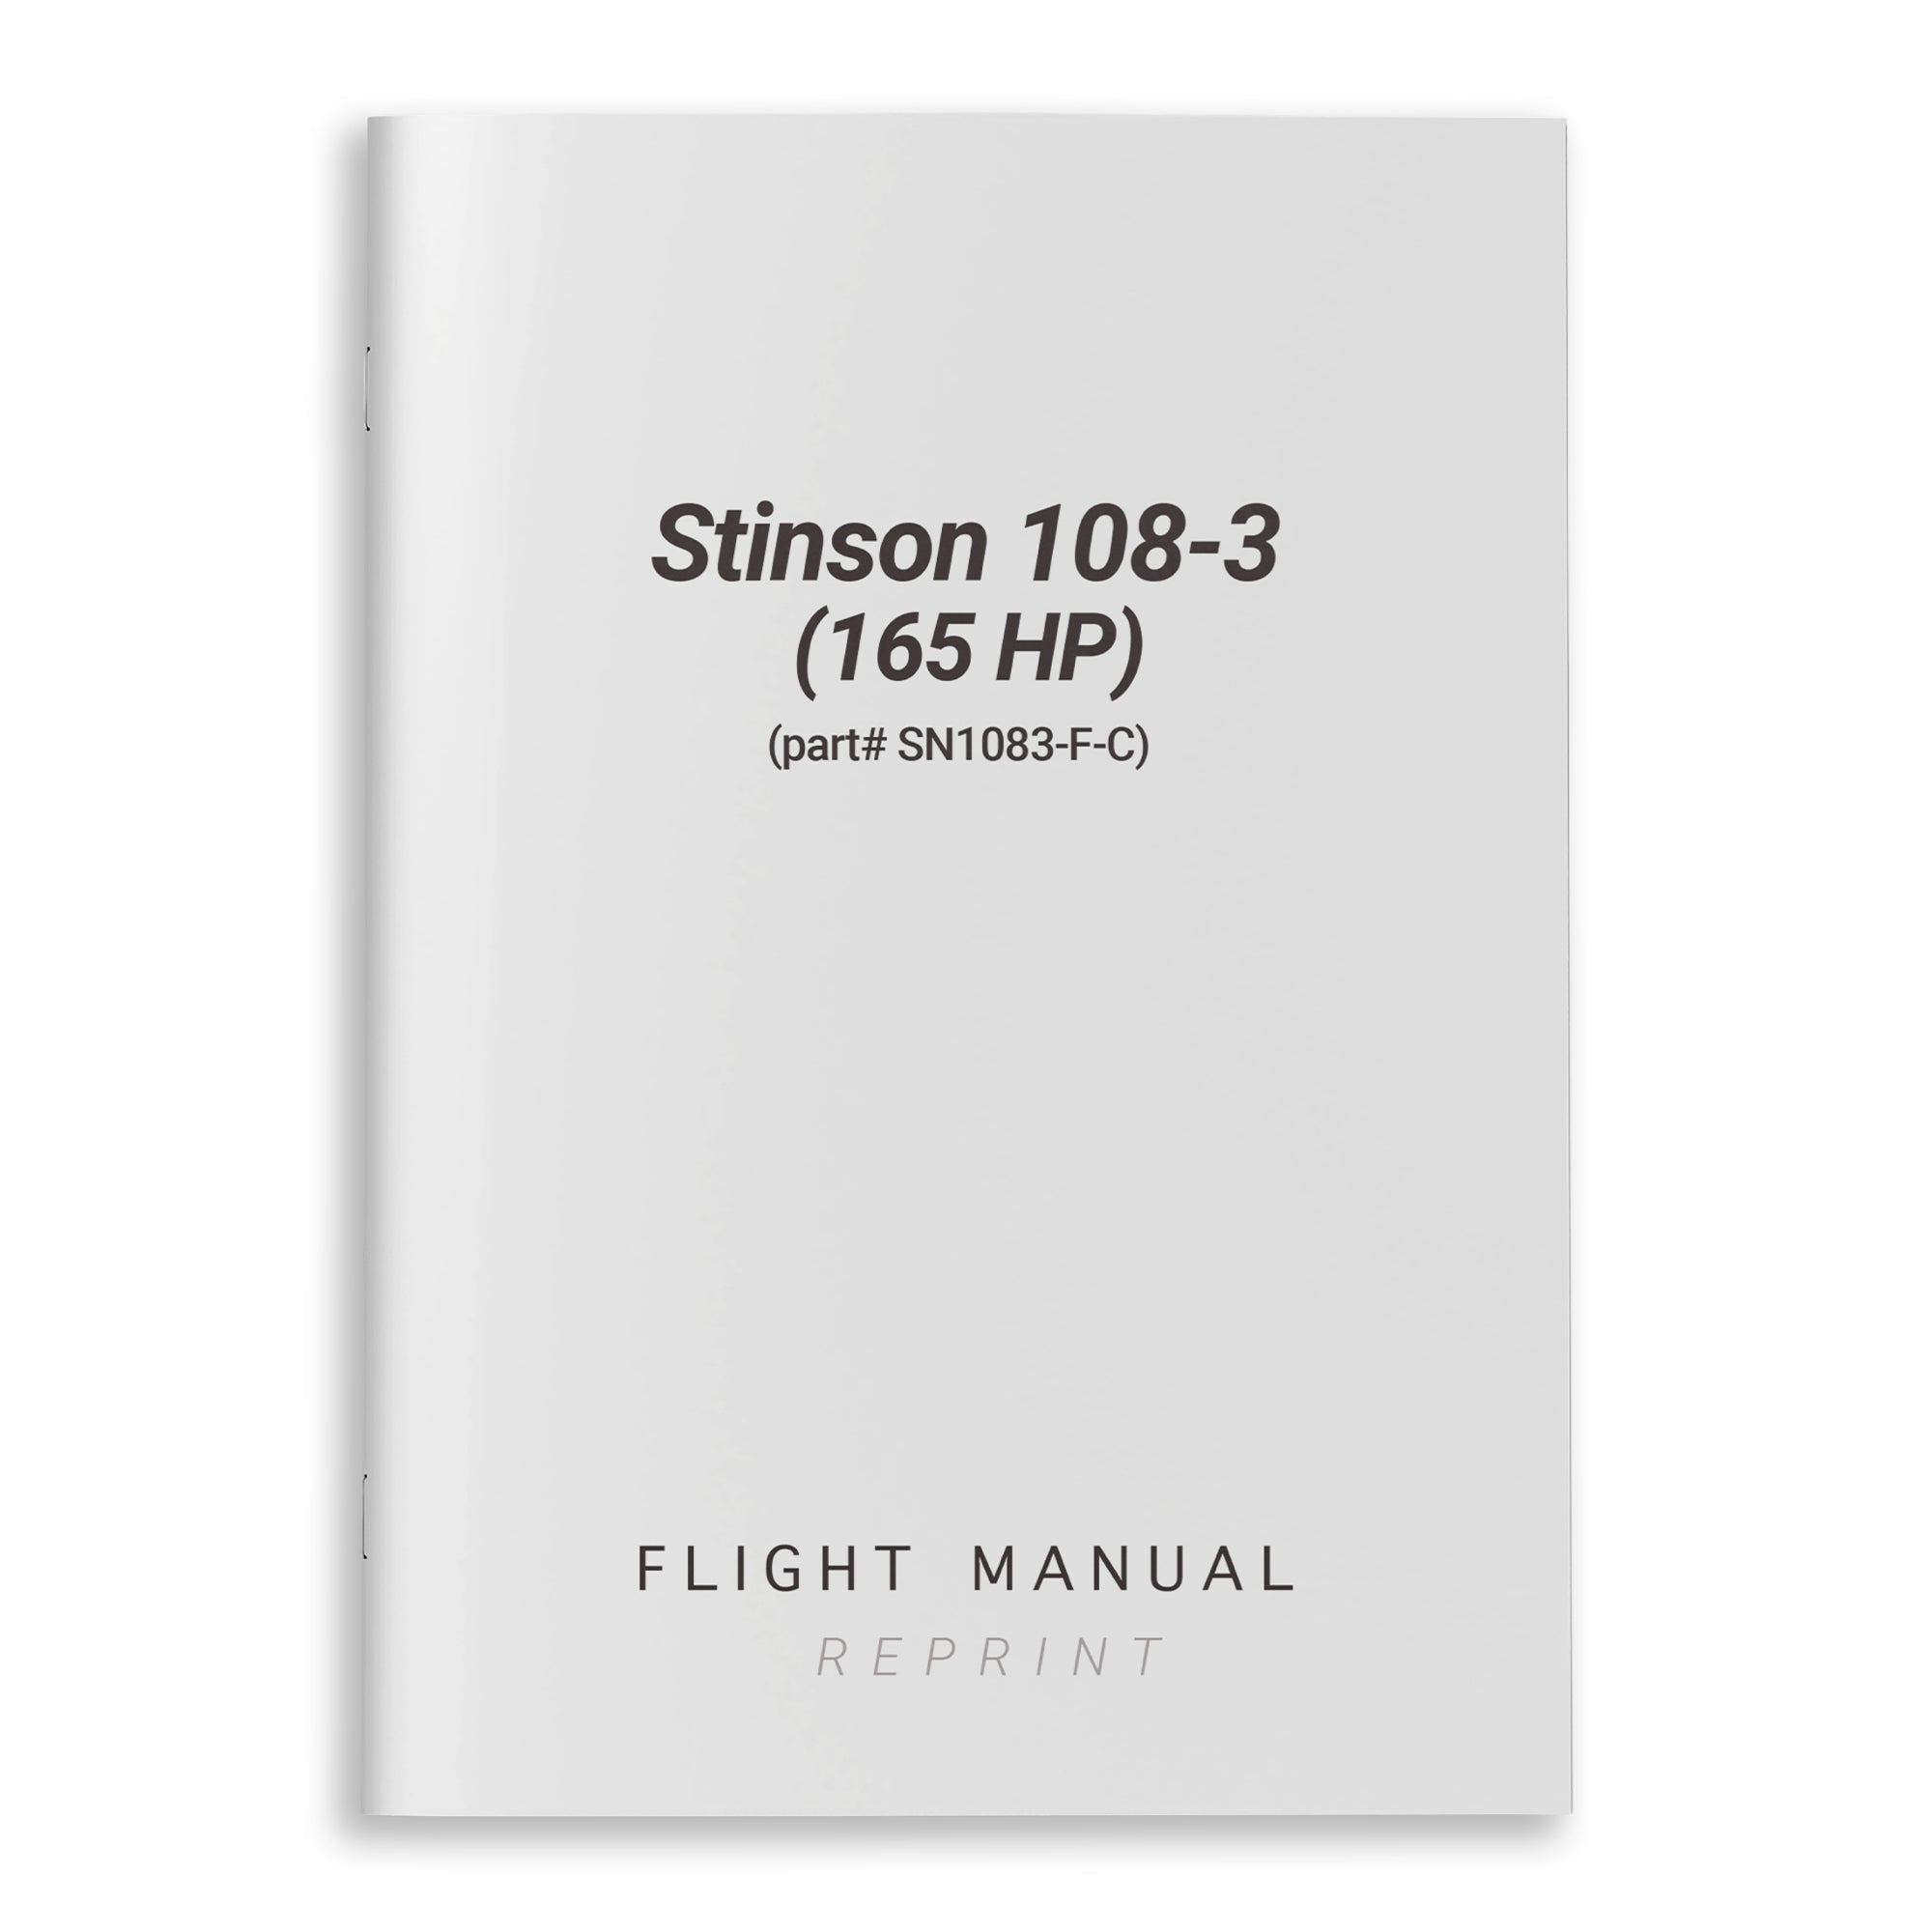 Stinson 108-3 (165 HP) Flight Manual (part# SN1083-F-C) - PilotMall.com